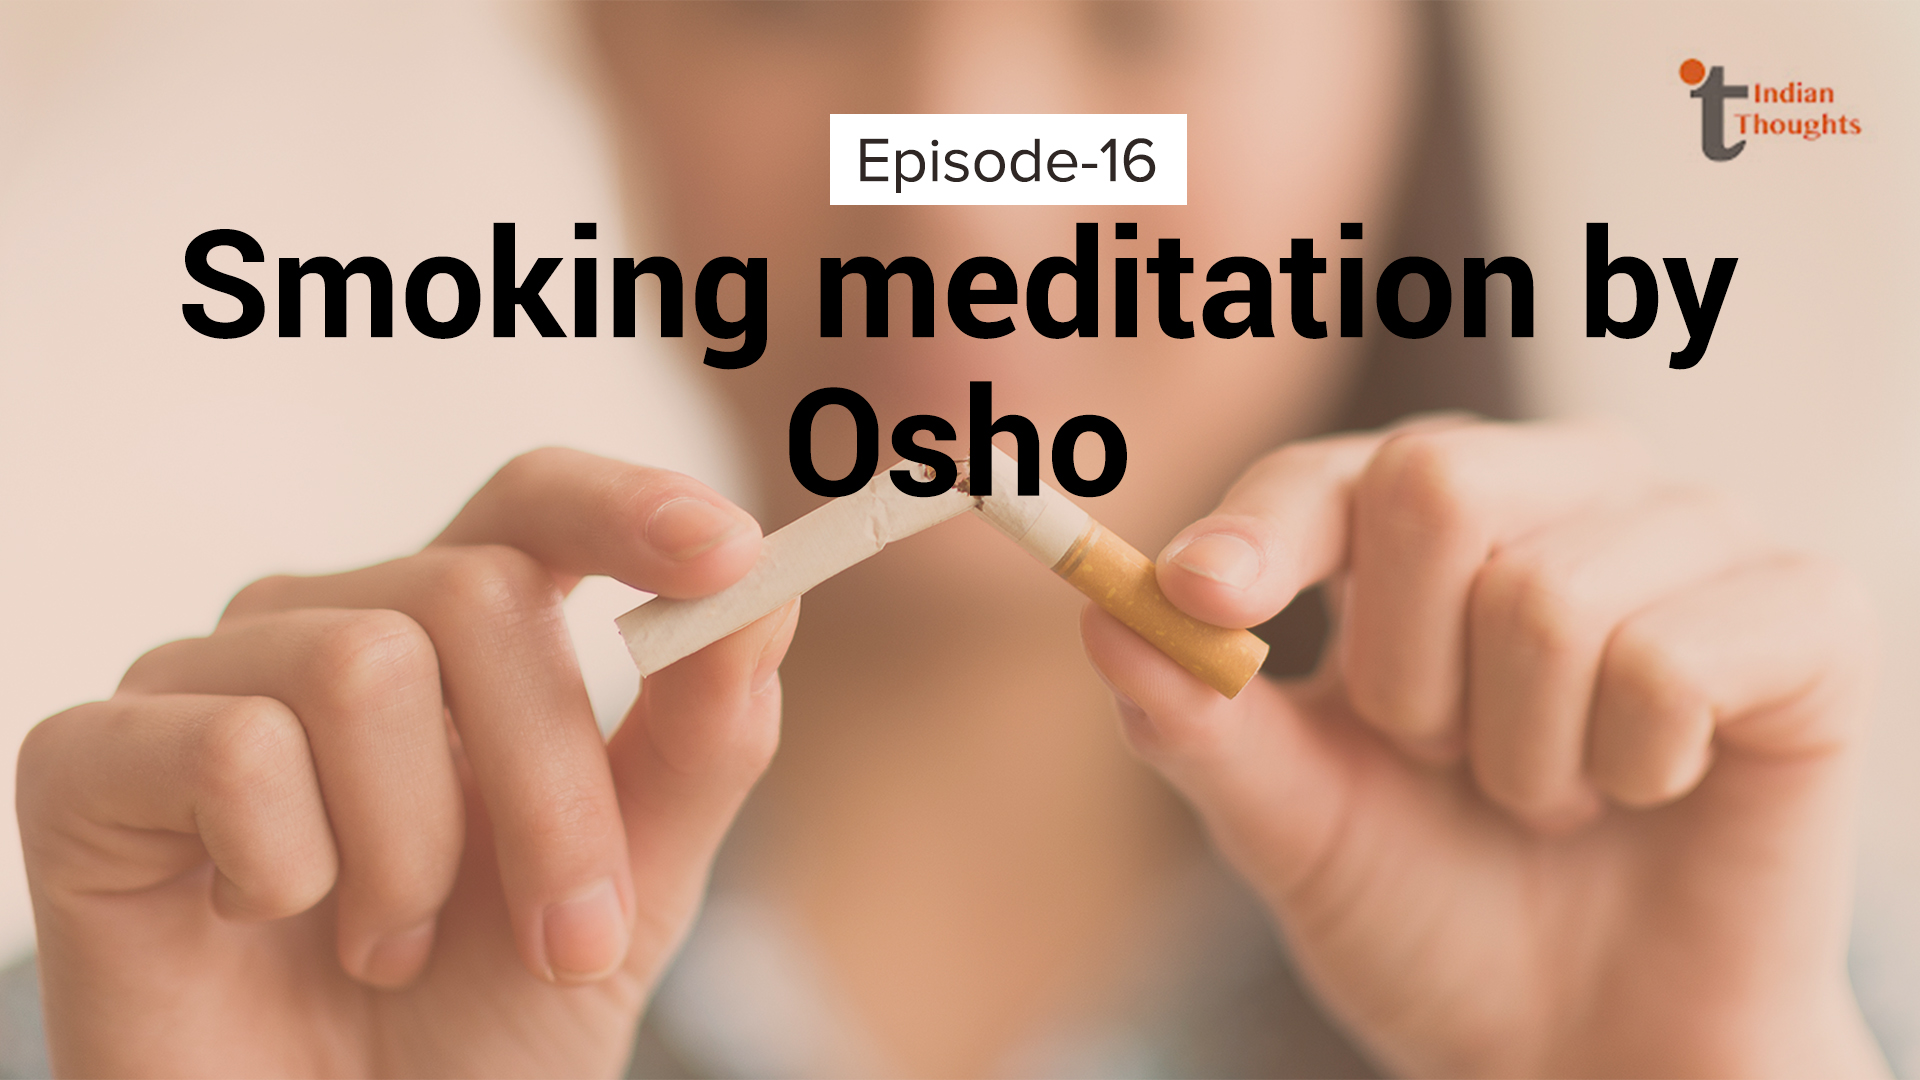 A smoking meditation by Osho